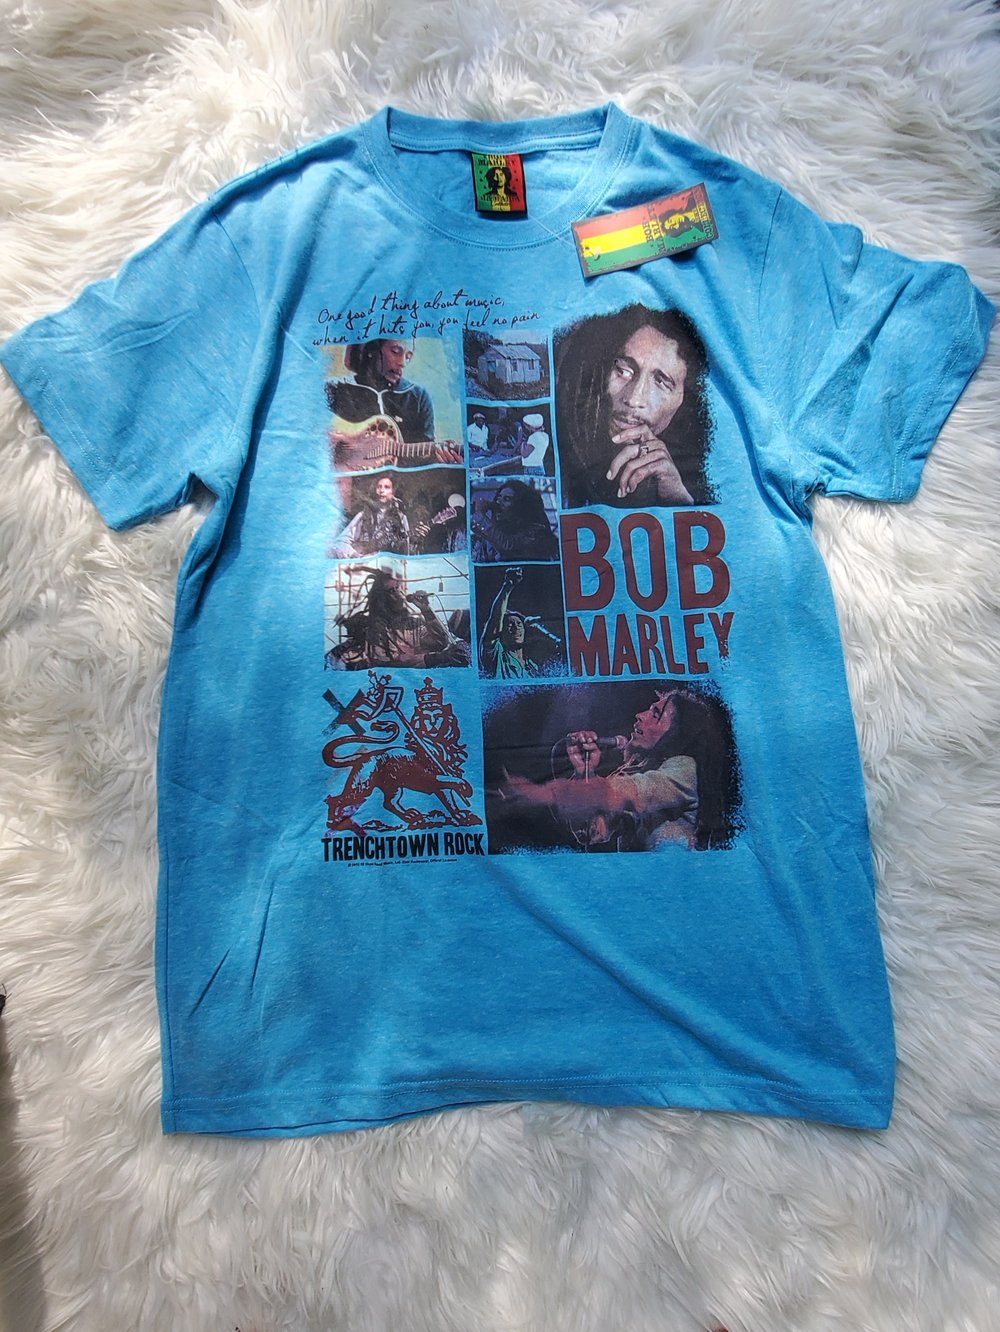 Bob Marley shirt